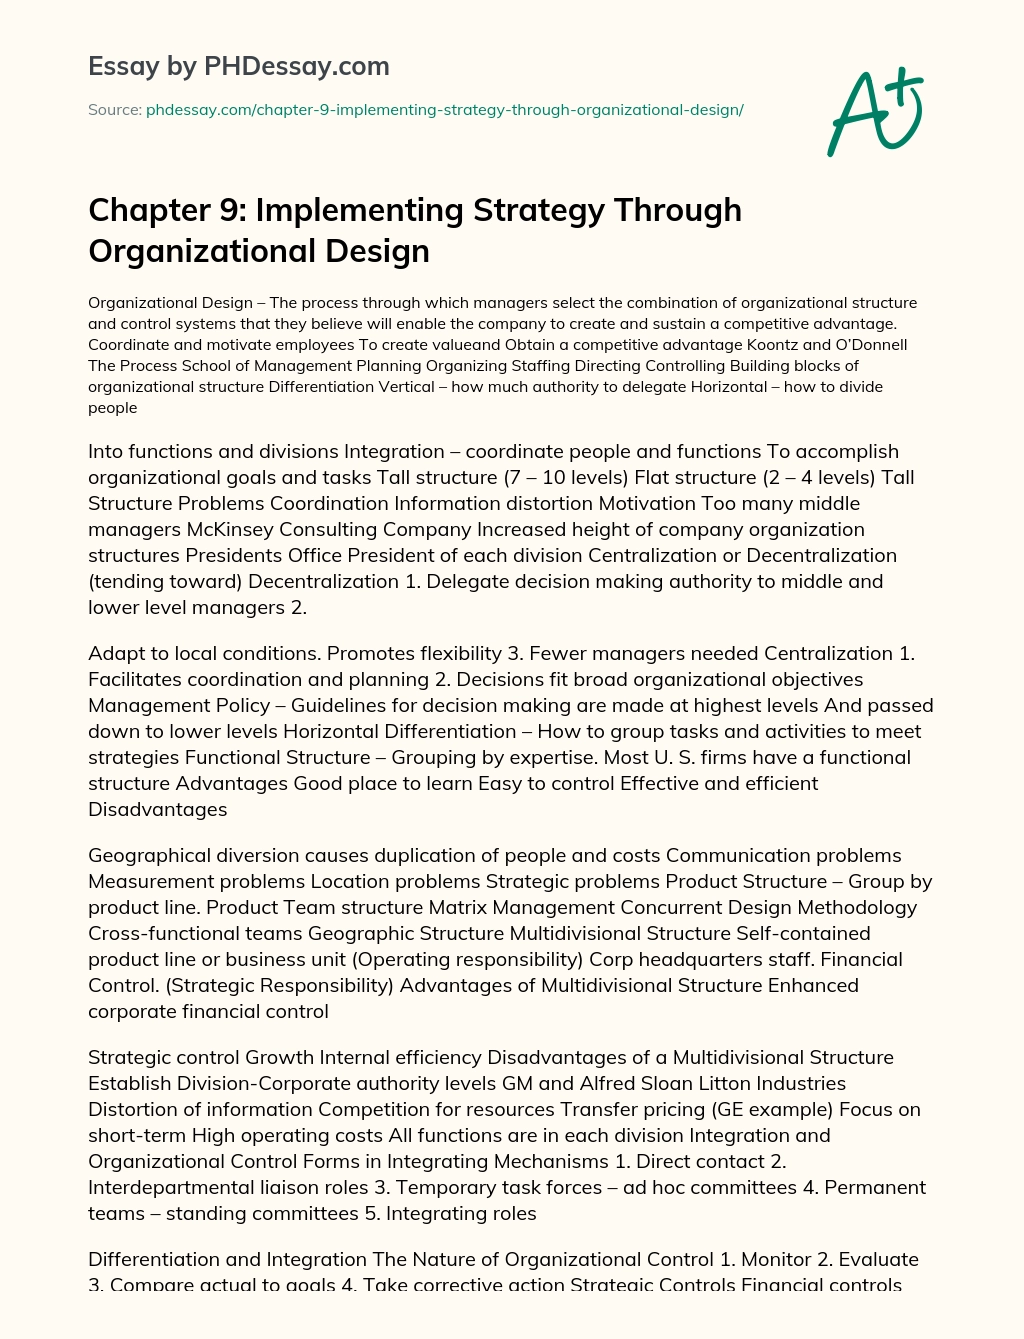 Implementing Strategy Through Organizational Design essay